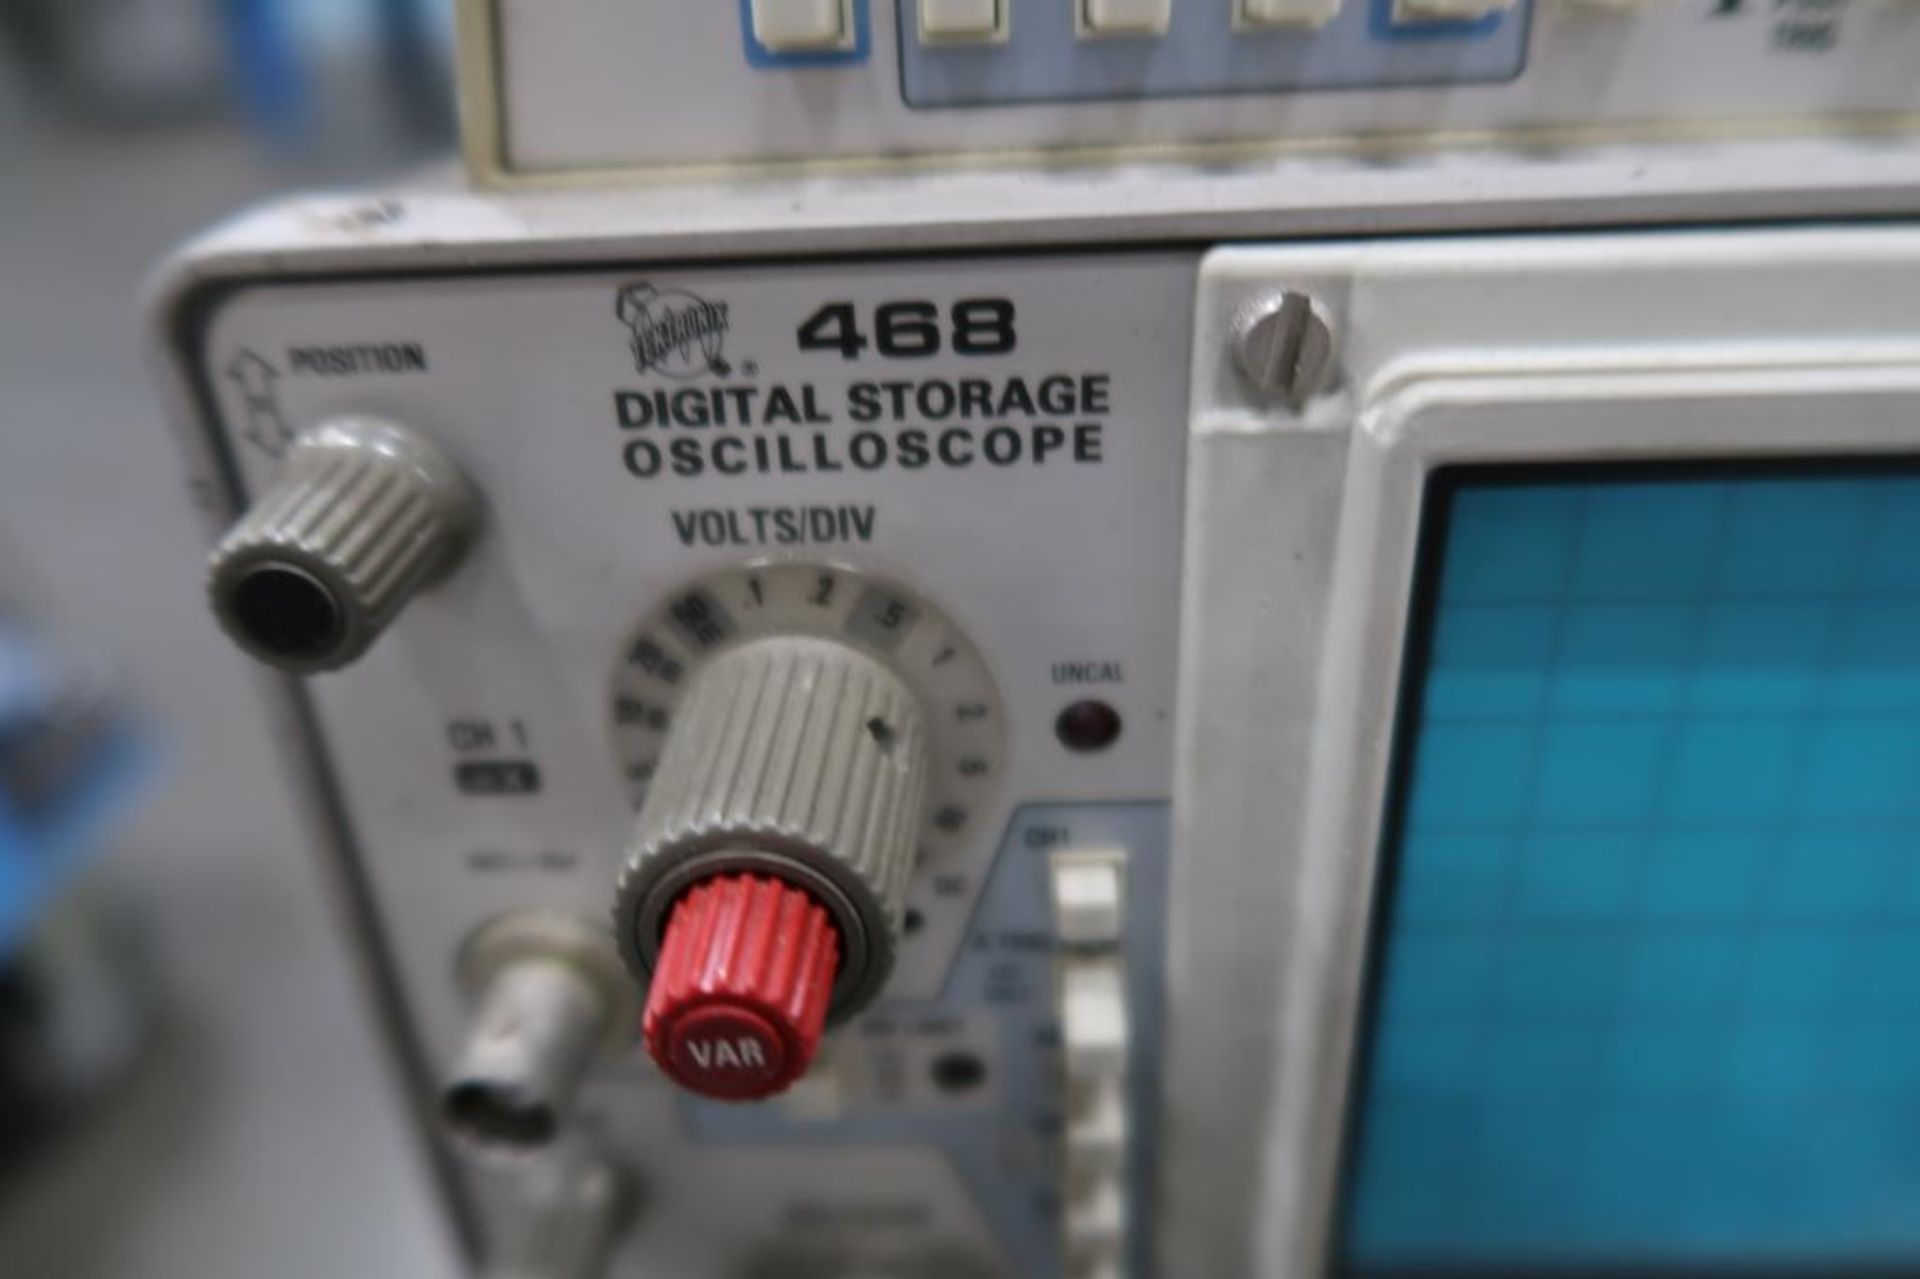 Tektronix Model 468, Digital Storage Oscilloscope - Image 4 of 7